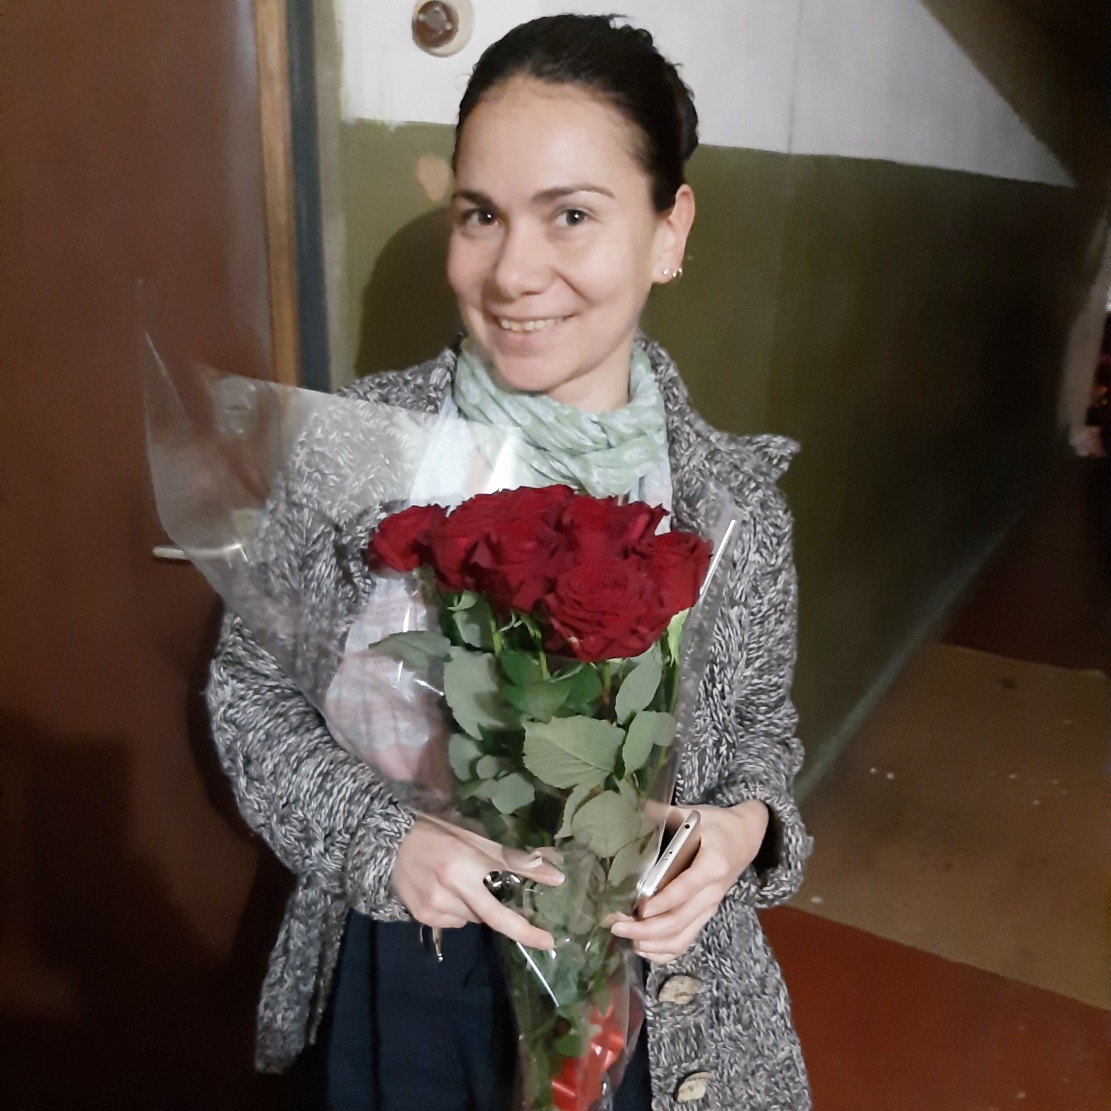 Happy recipient of flowers in Russia